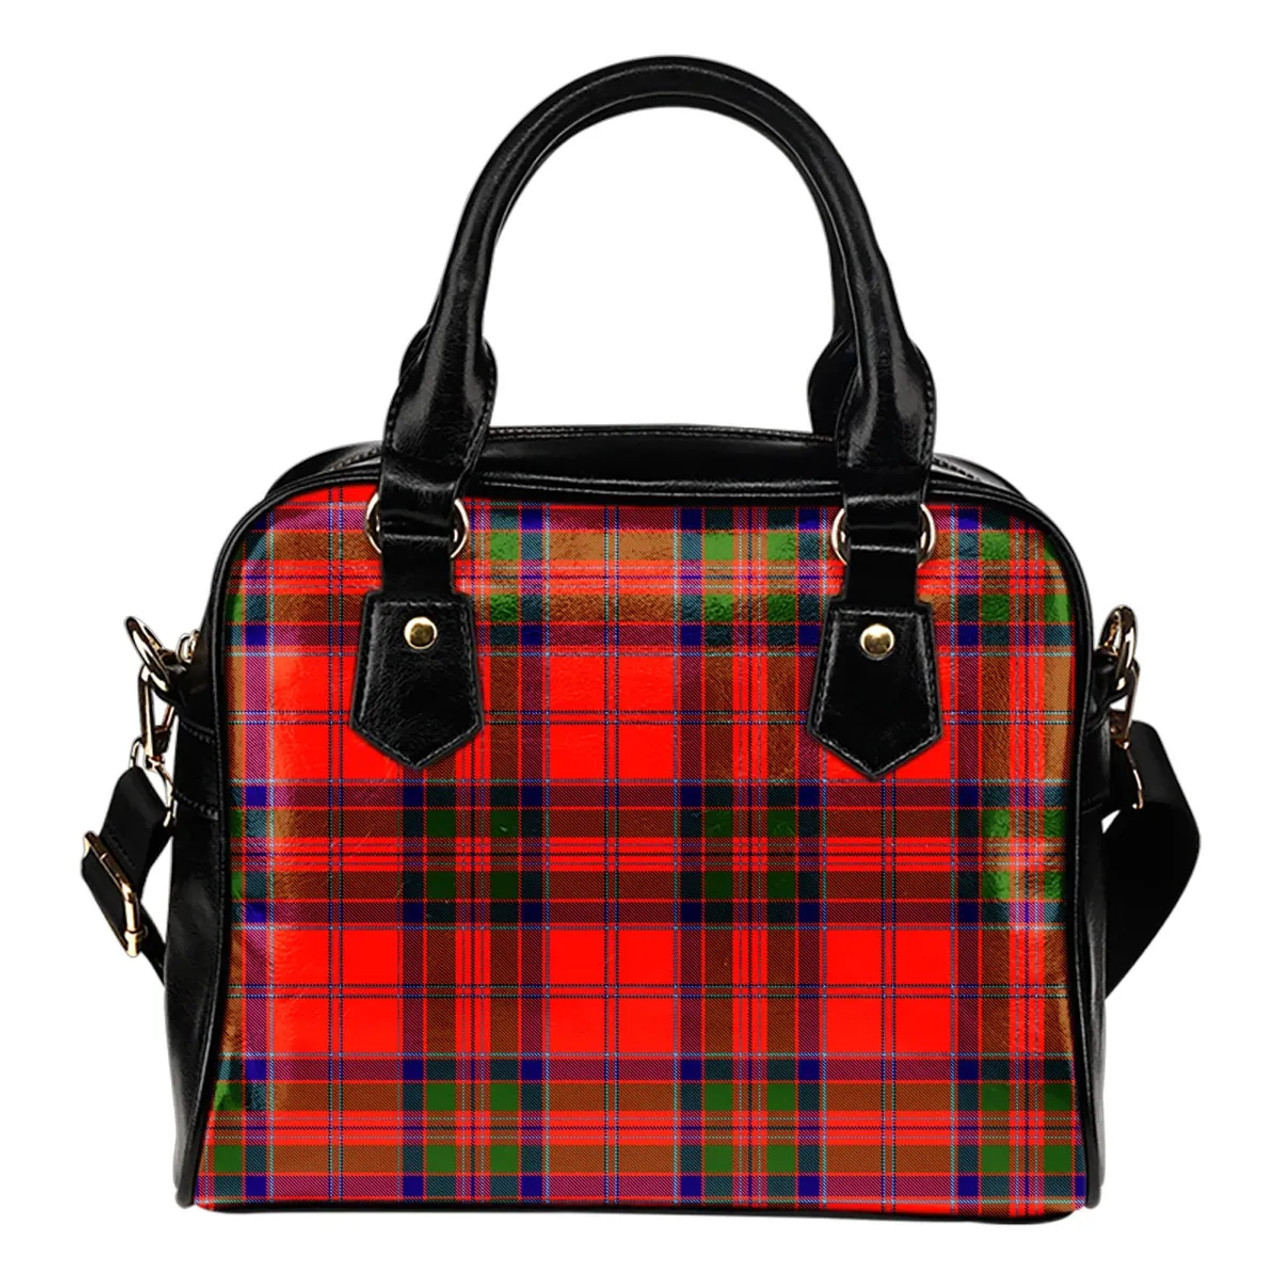 Dooney & Bourke Tartan Shopper | Tartan accessories, Bags, Plaid tote bag